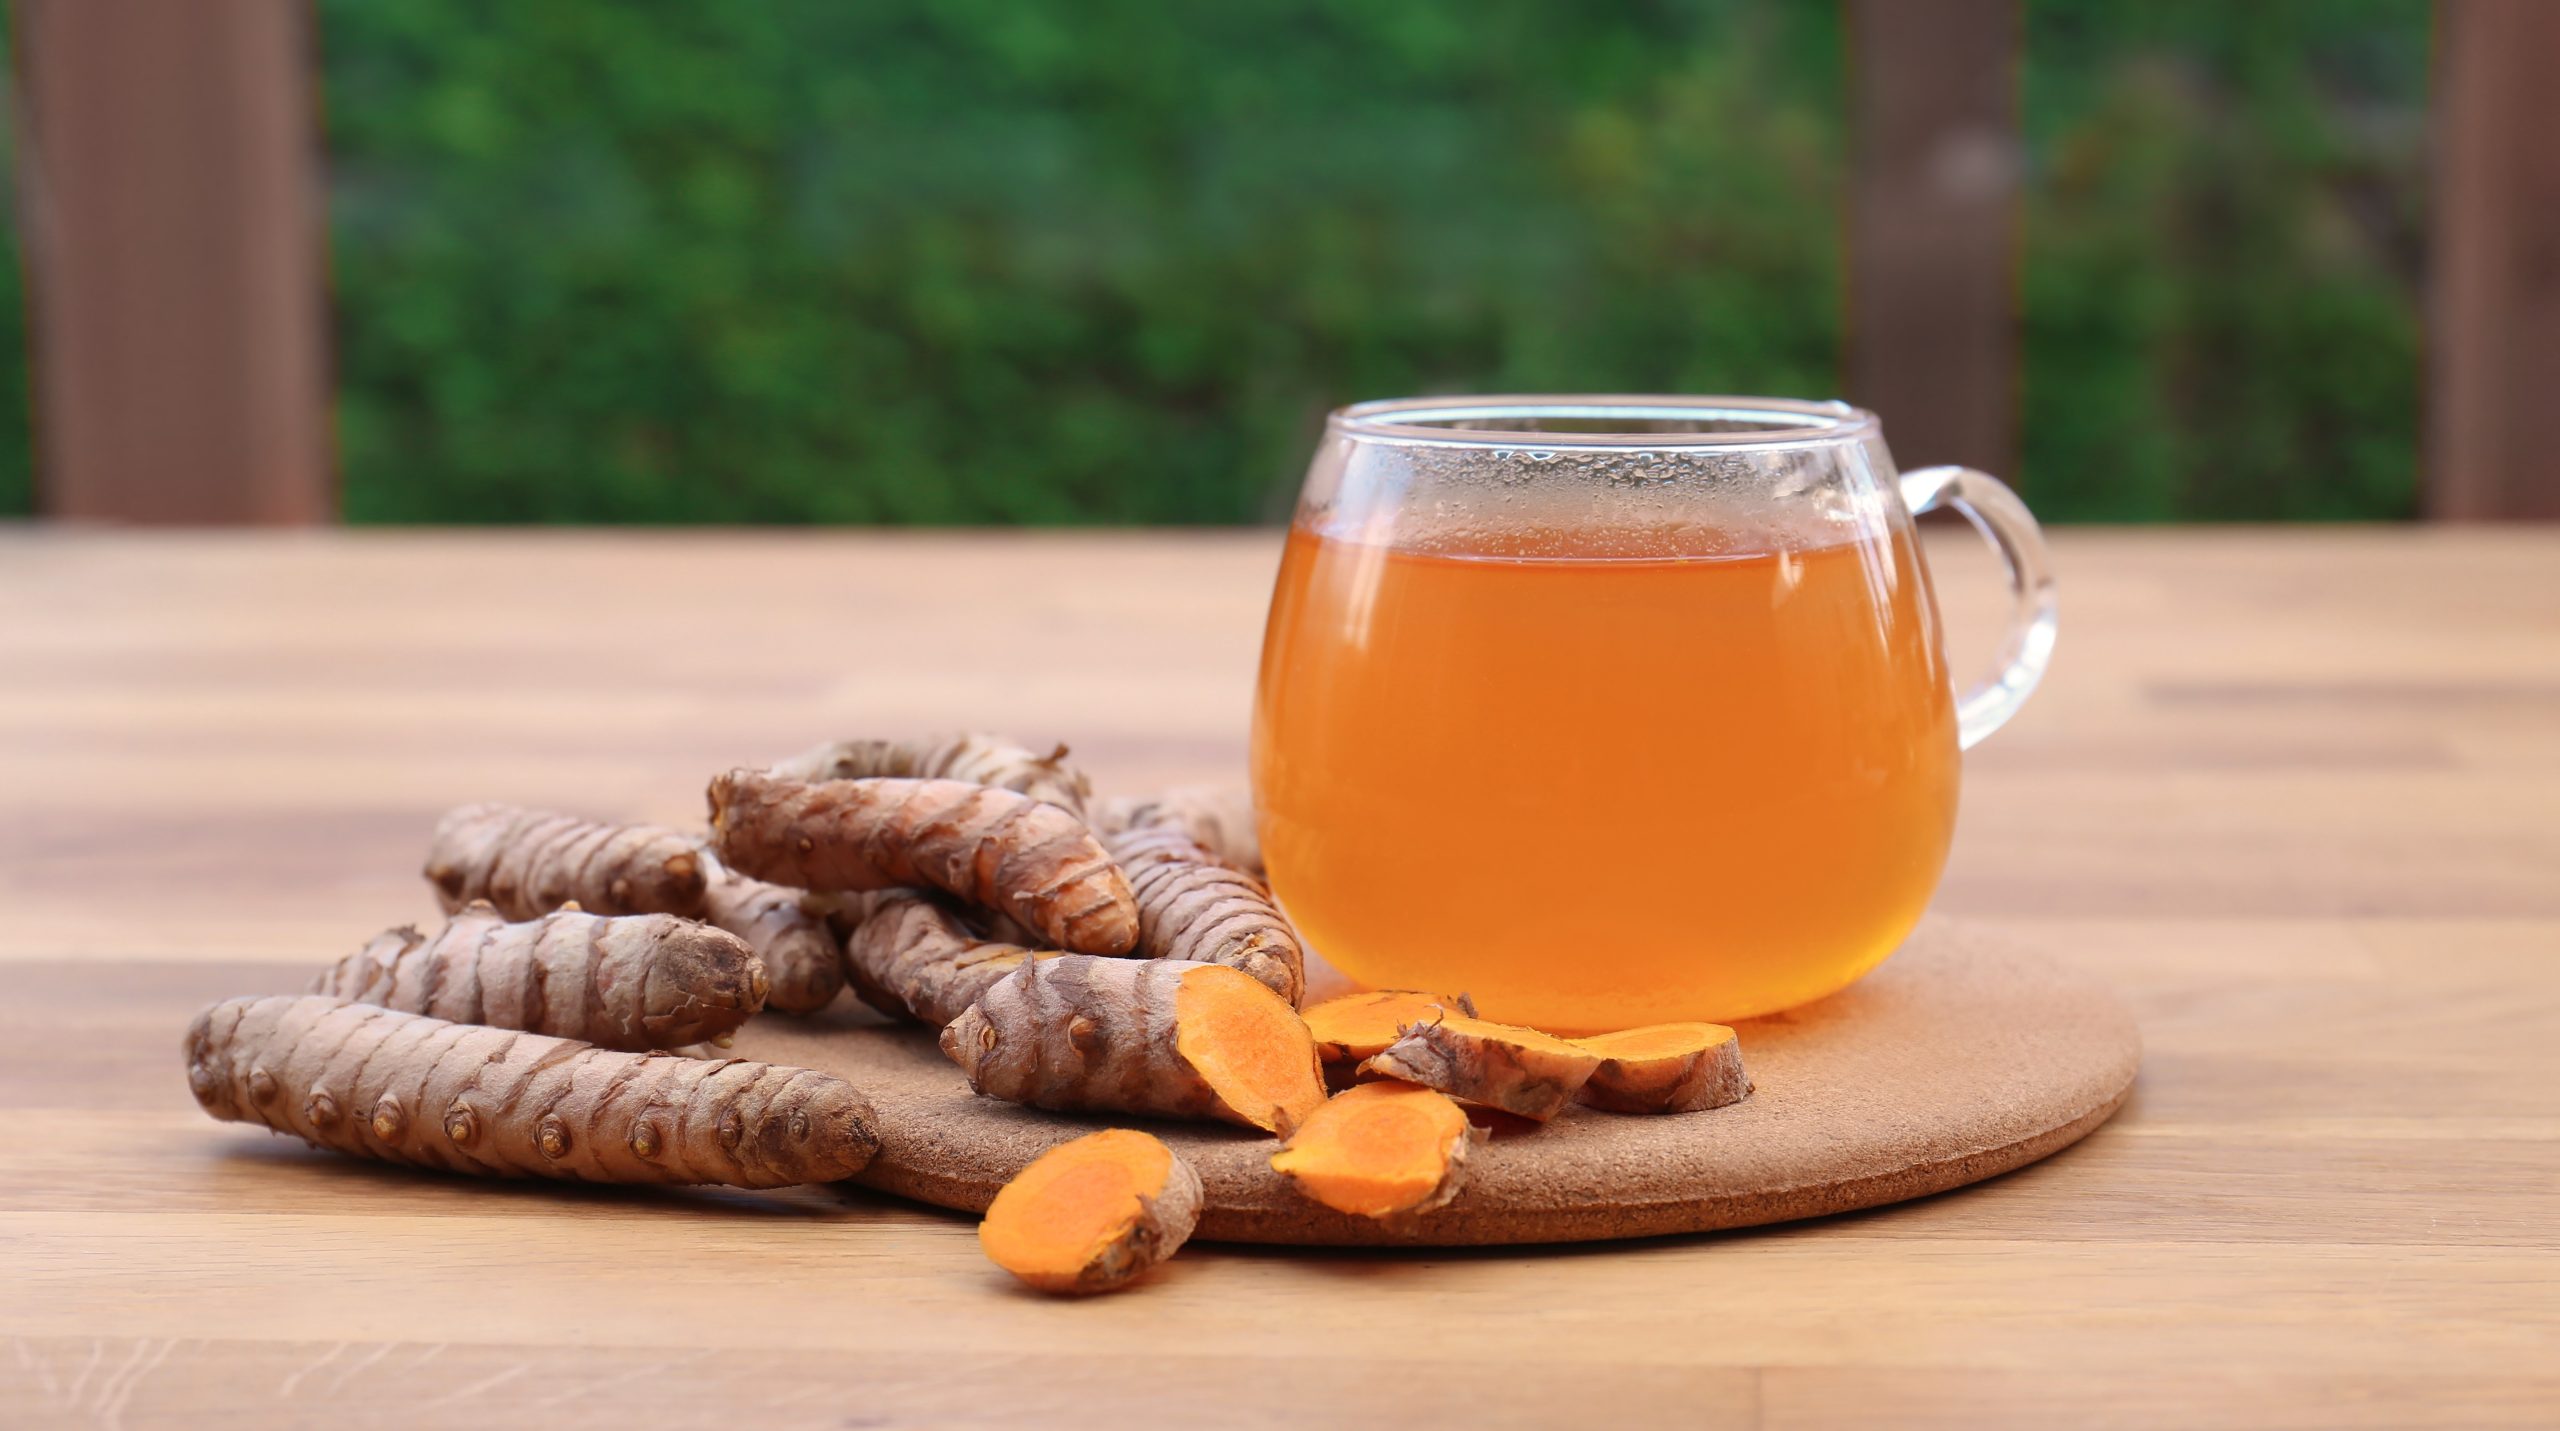 Tea with Curcumin for the health benefits